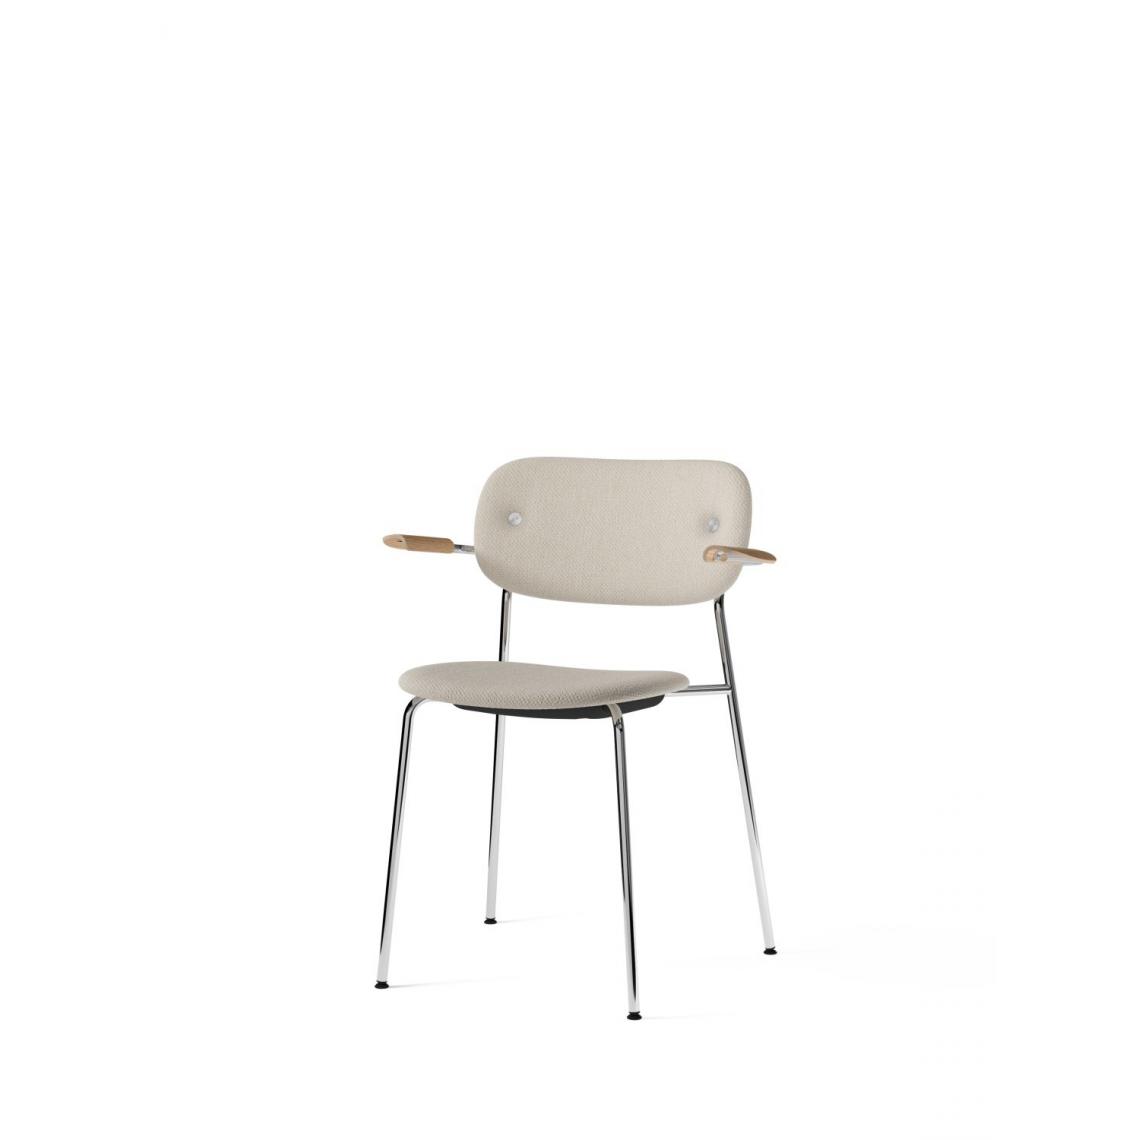 Menu - Co Dining Chair avec accoudoir - MenuCoChairDoppiopanama004 - chêne, naturel - chrome - Chaises